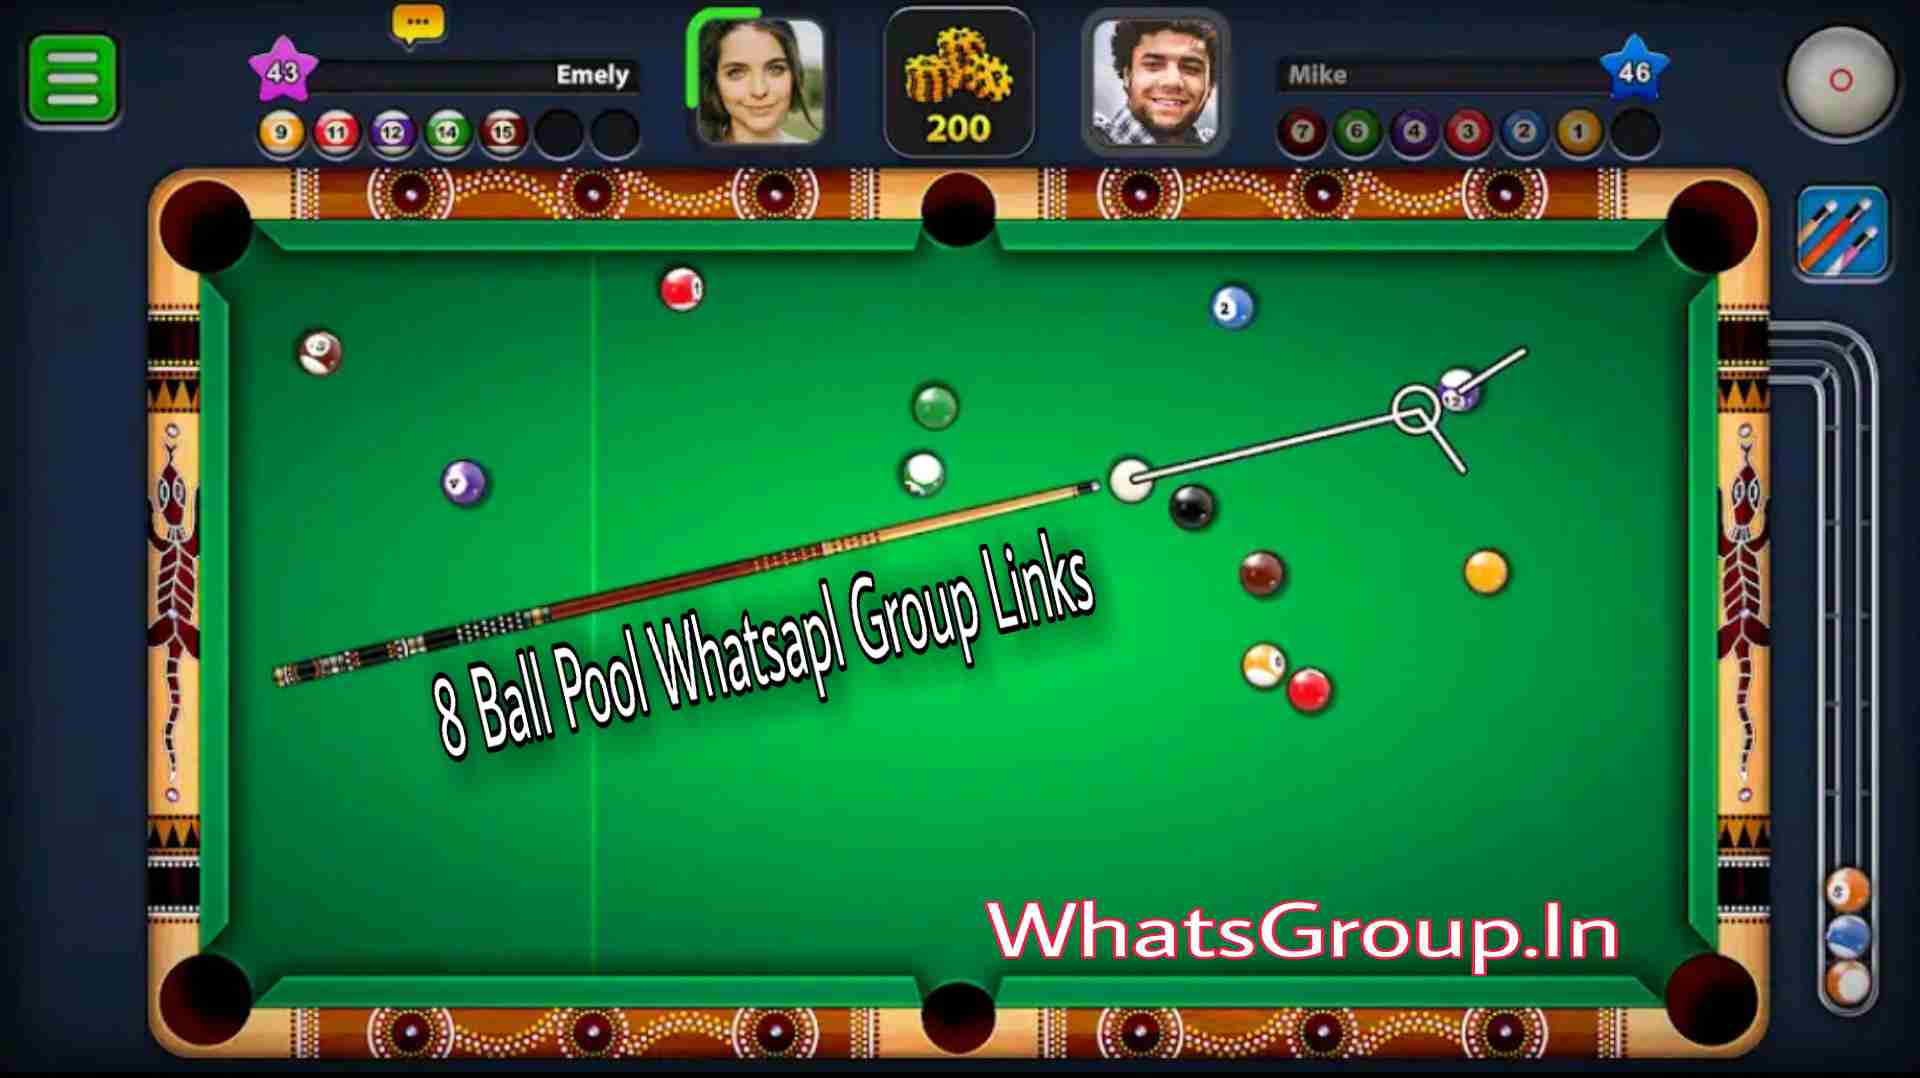 2000 8 Ball Pool Whatsapp Group Links